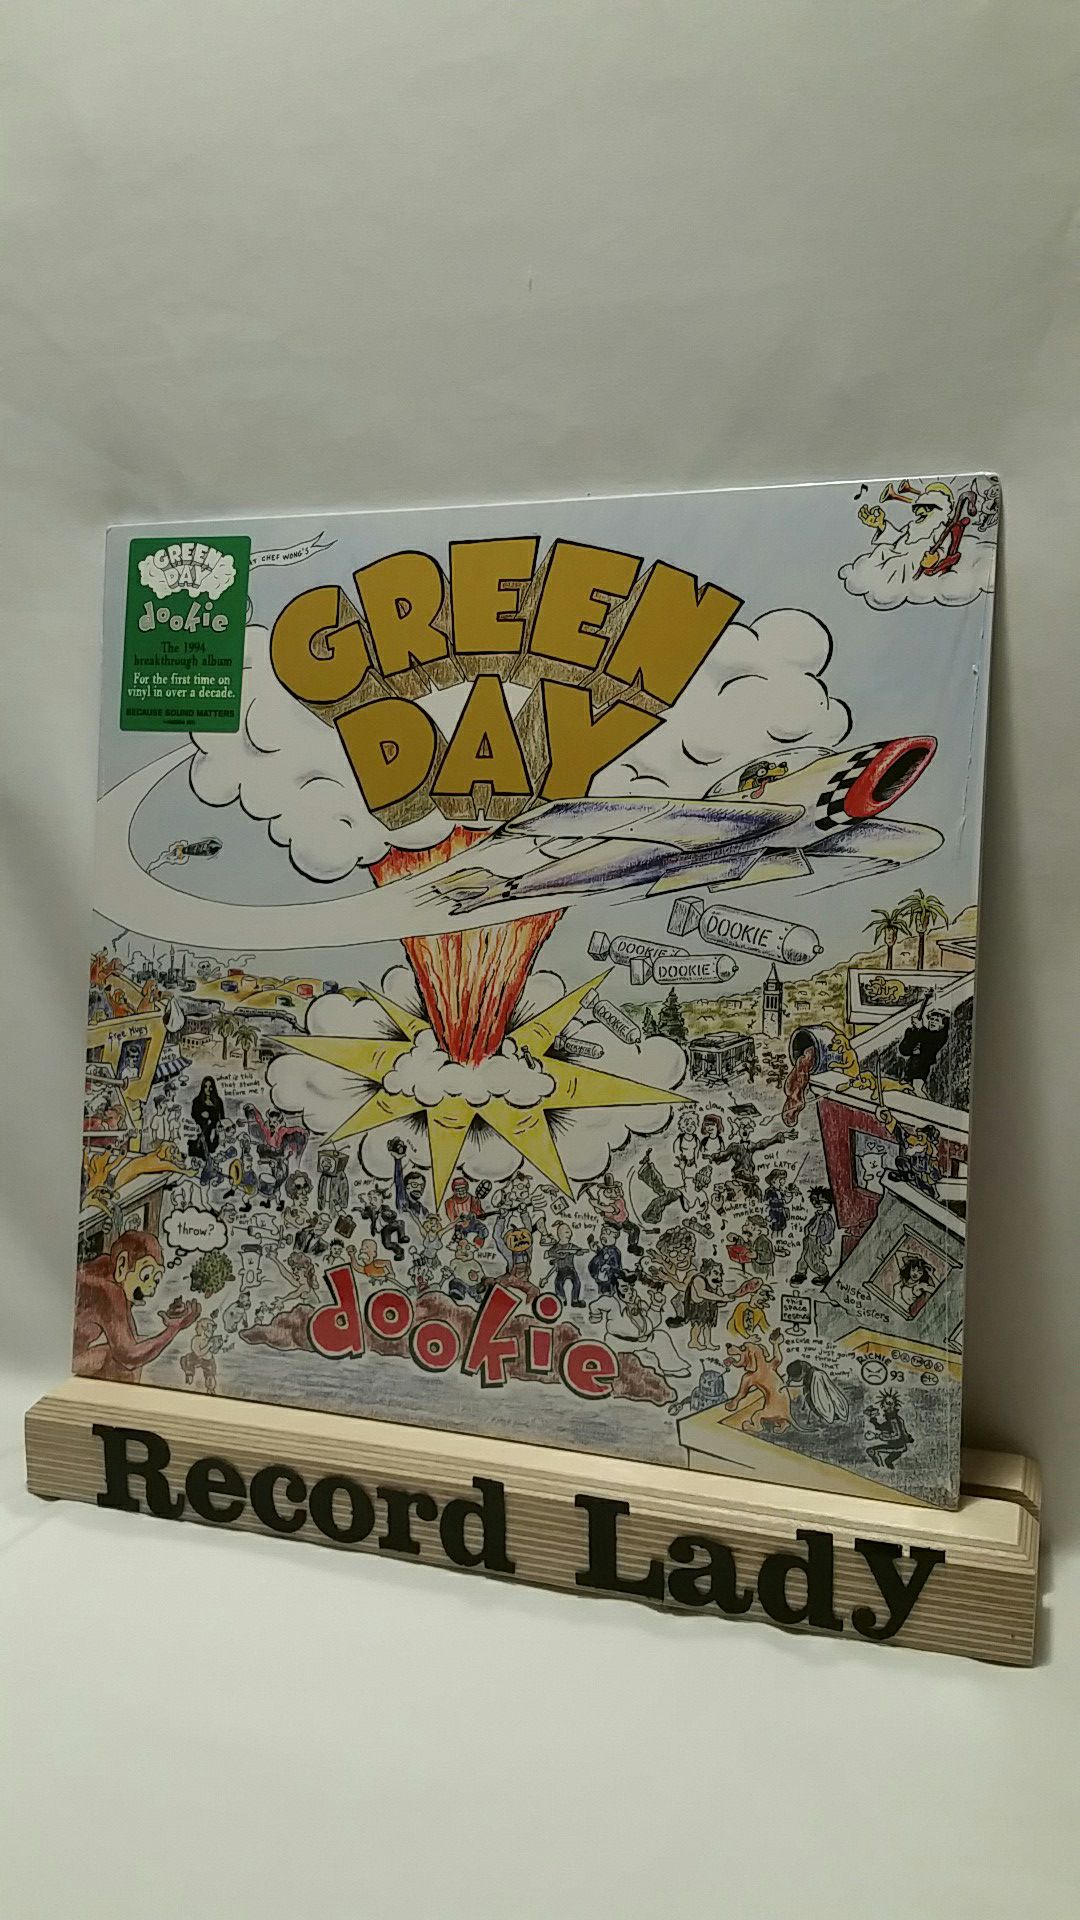 Green Day "Dookie" vinyl record